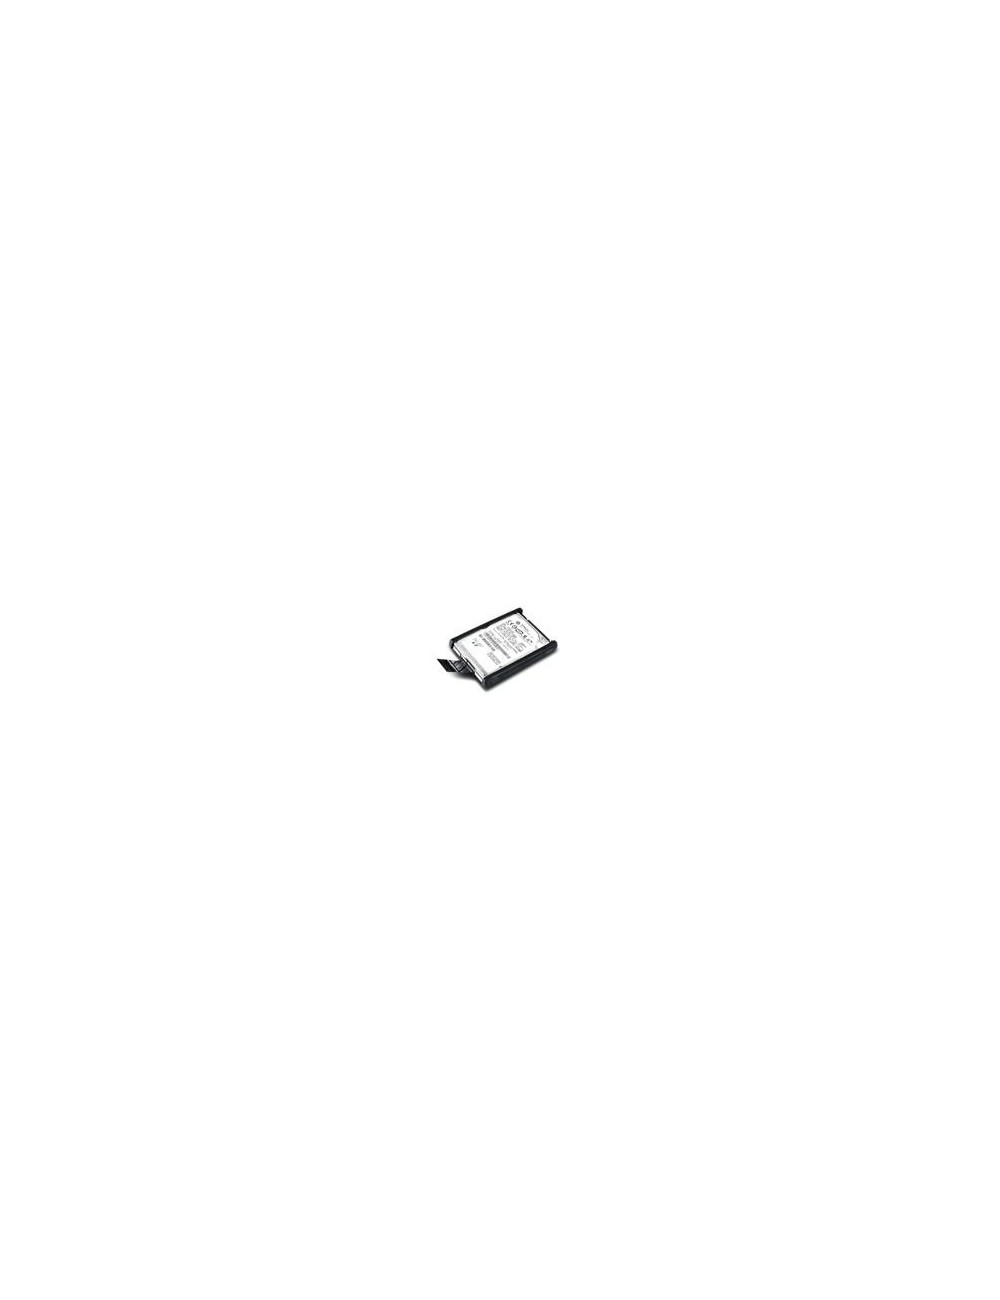 Lenovo ThinkPad 500GB 5400 rpm Hard Drive SATA